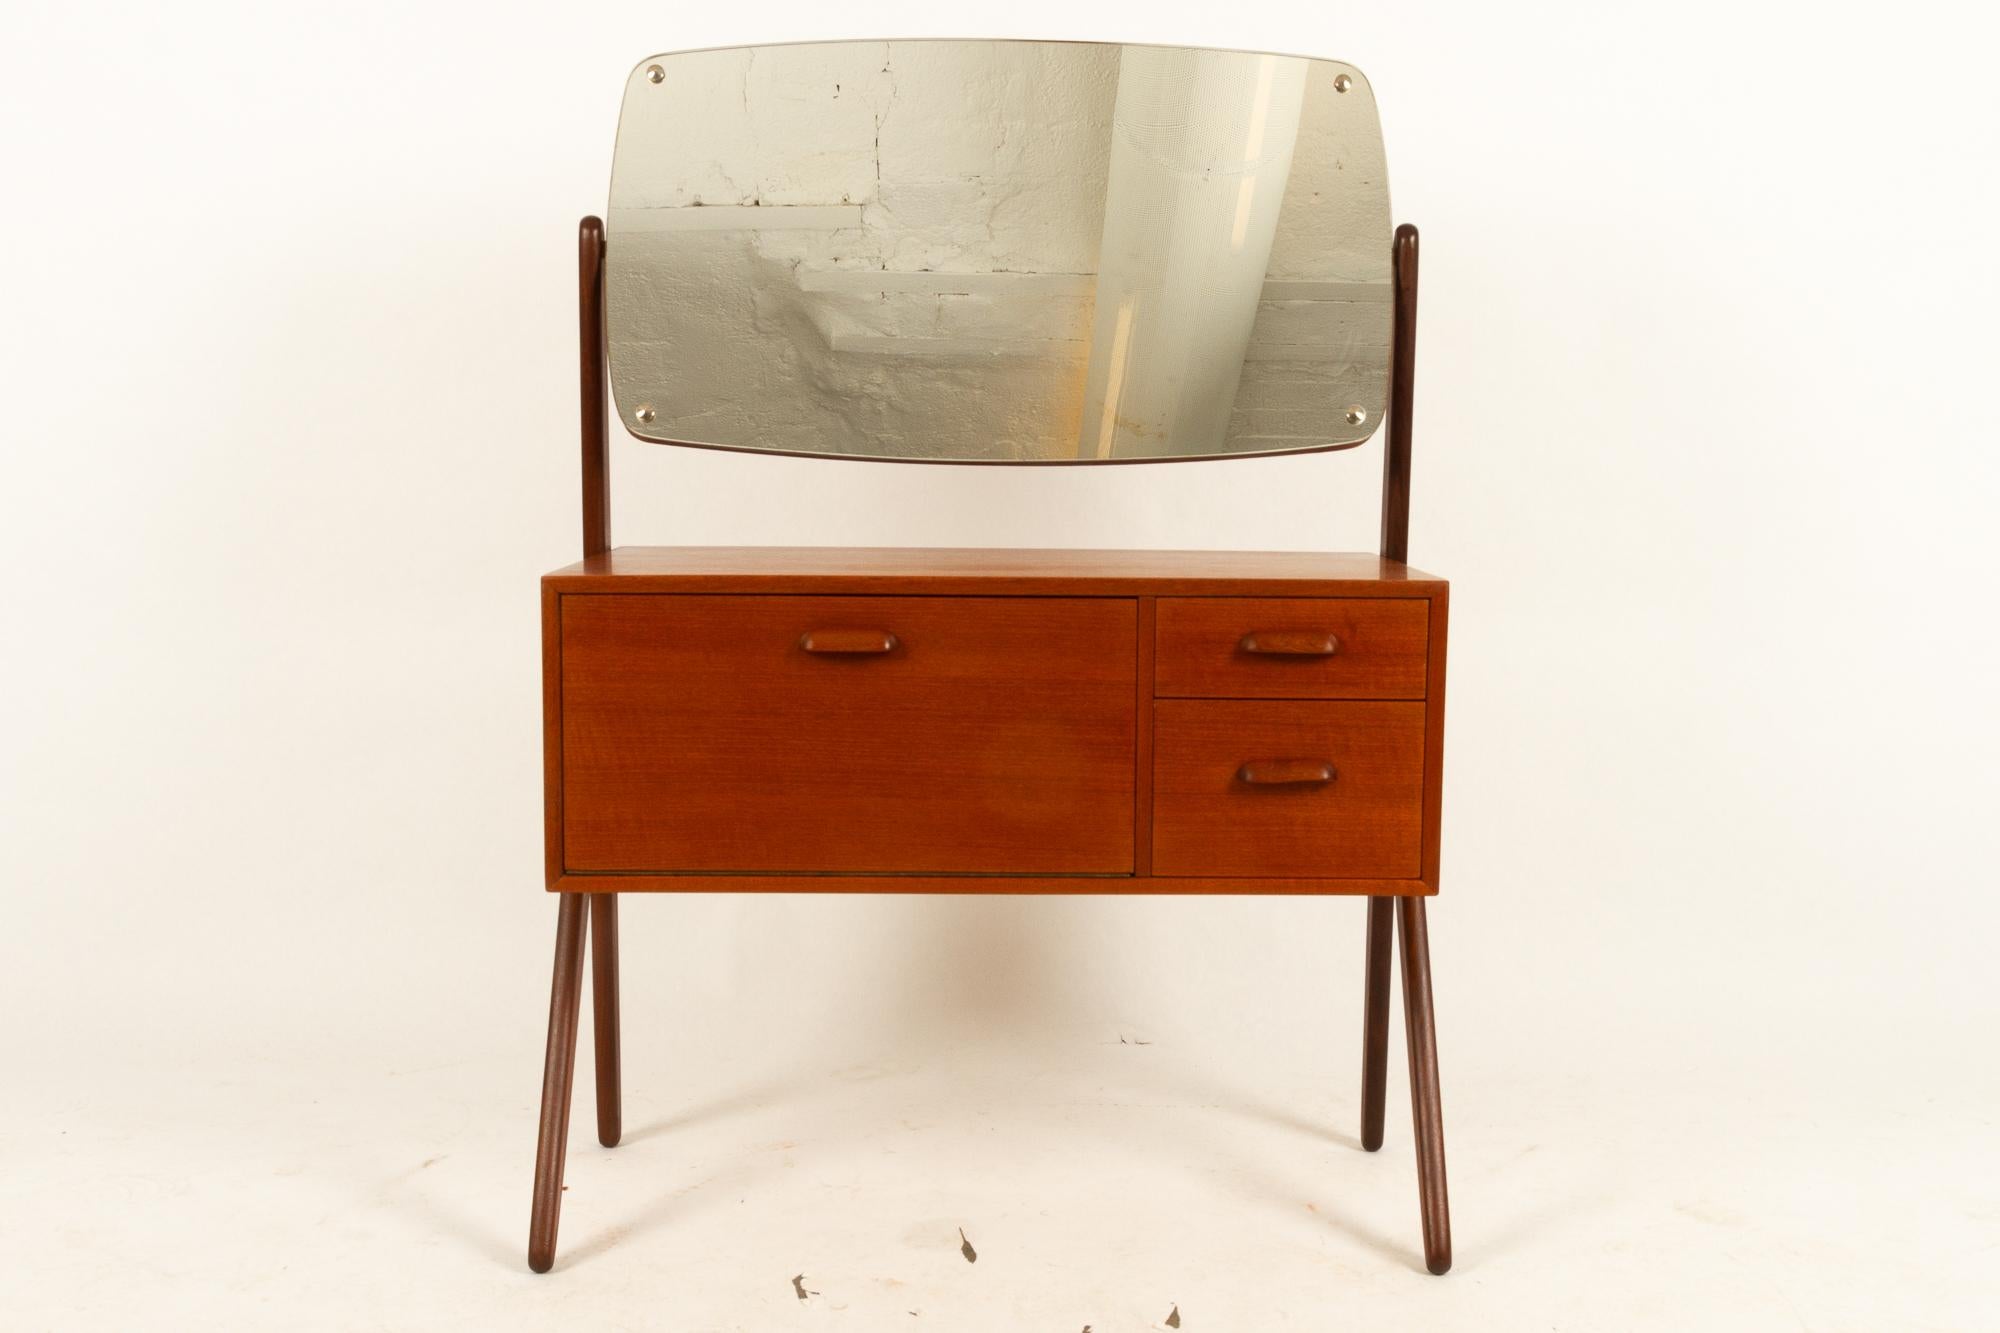 Danish vintage teak vanity by Ølholm 1960s
Elegant Mid-Century Modern dressing table in teak with large mirror. Features cabinet and two drawers. Mirror can be tilted. Y-legs in solid teak.
Height tabletop: 60 cm / 24